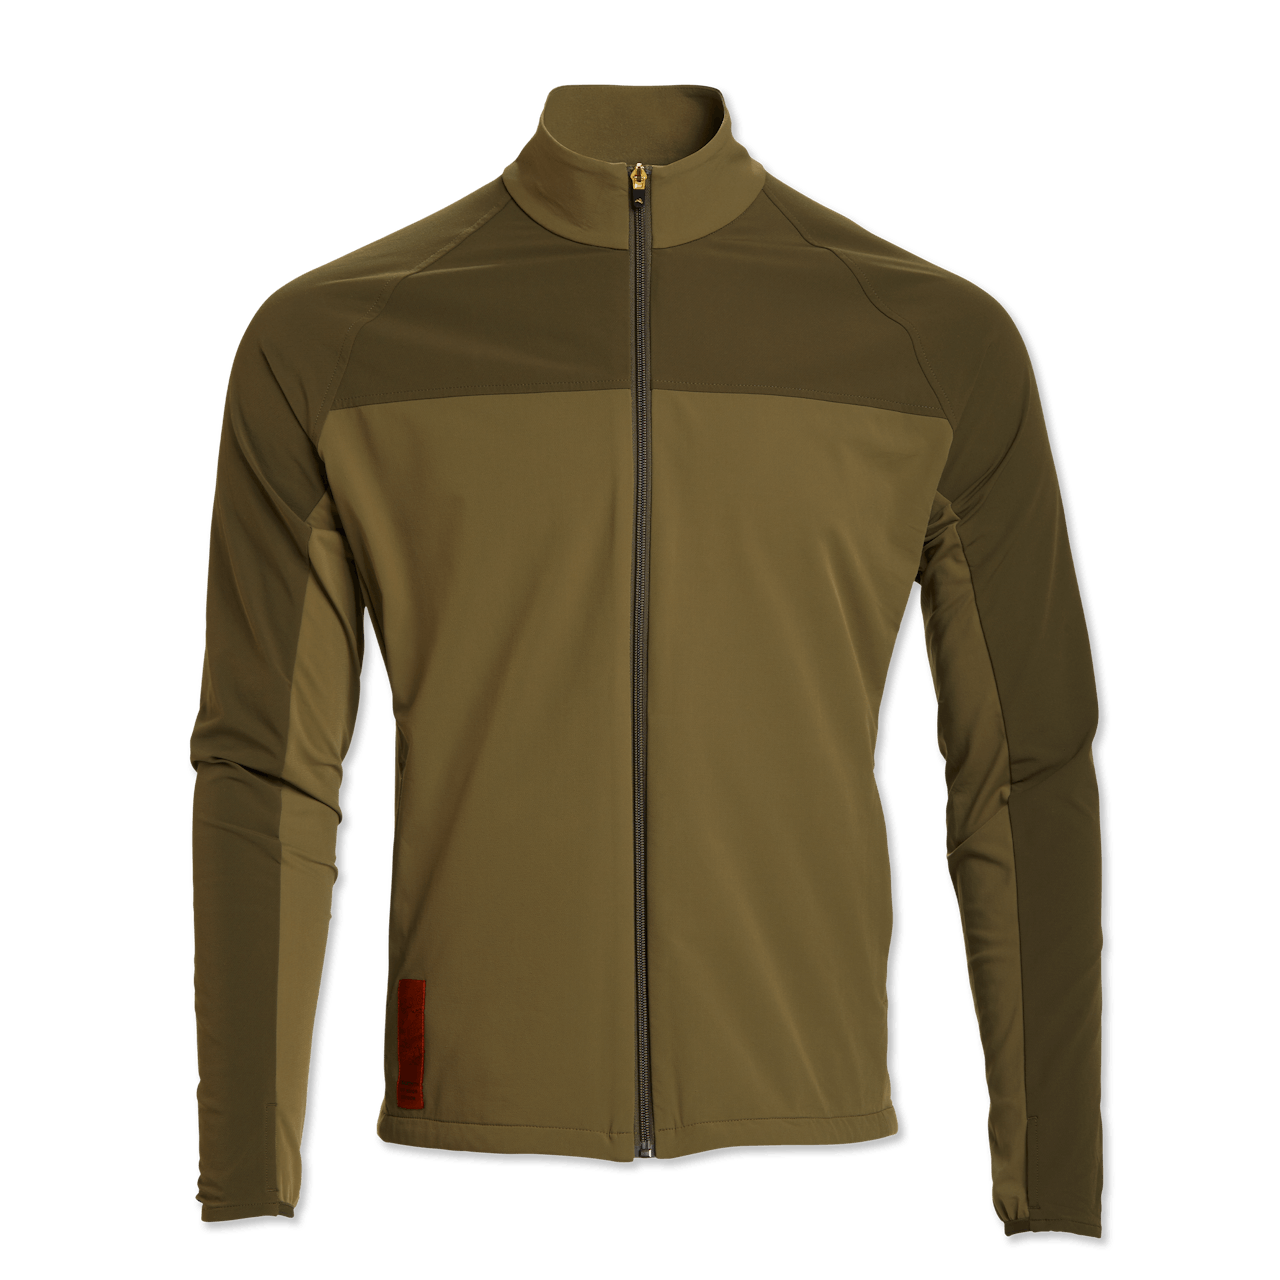 Ivy/Moss - FINAL SALE / S / Jacket